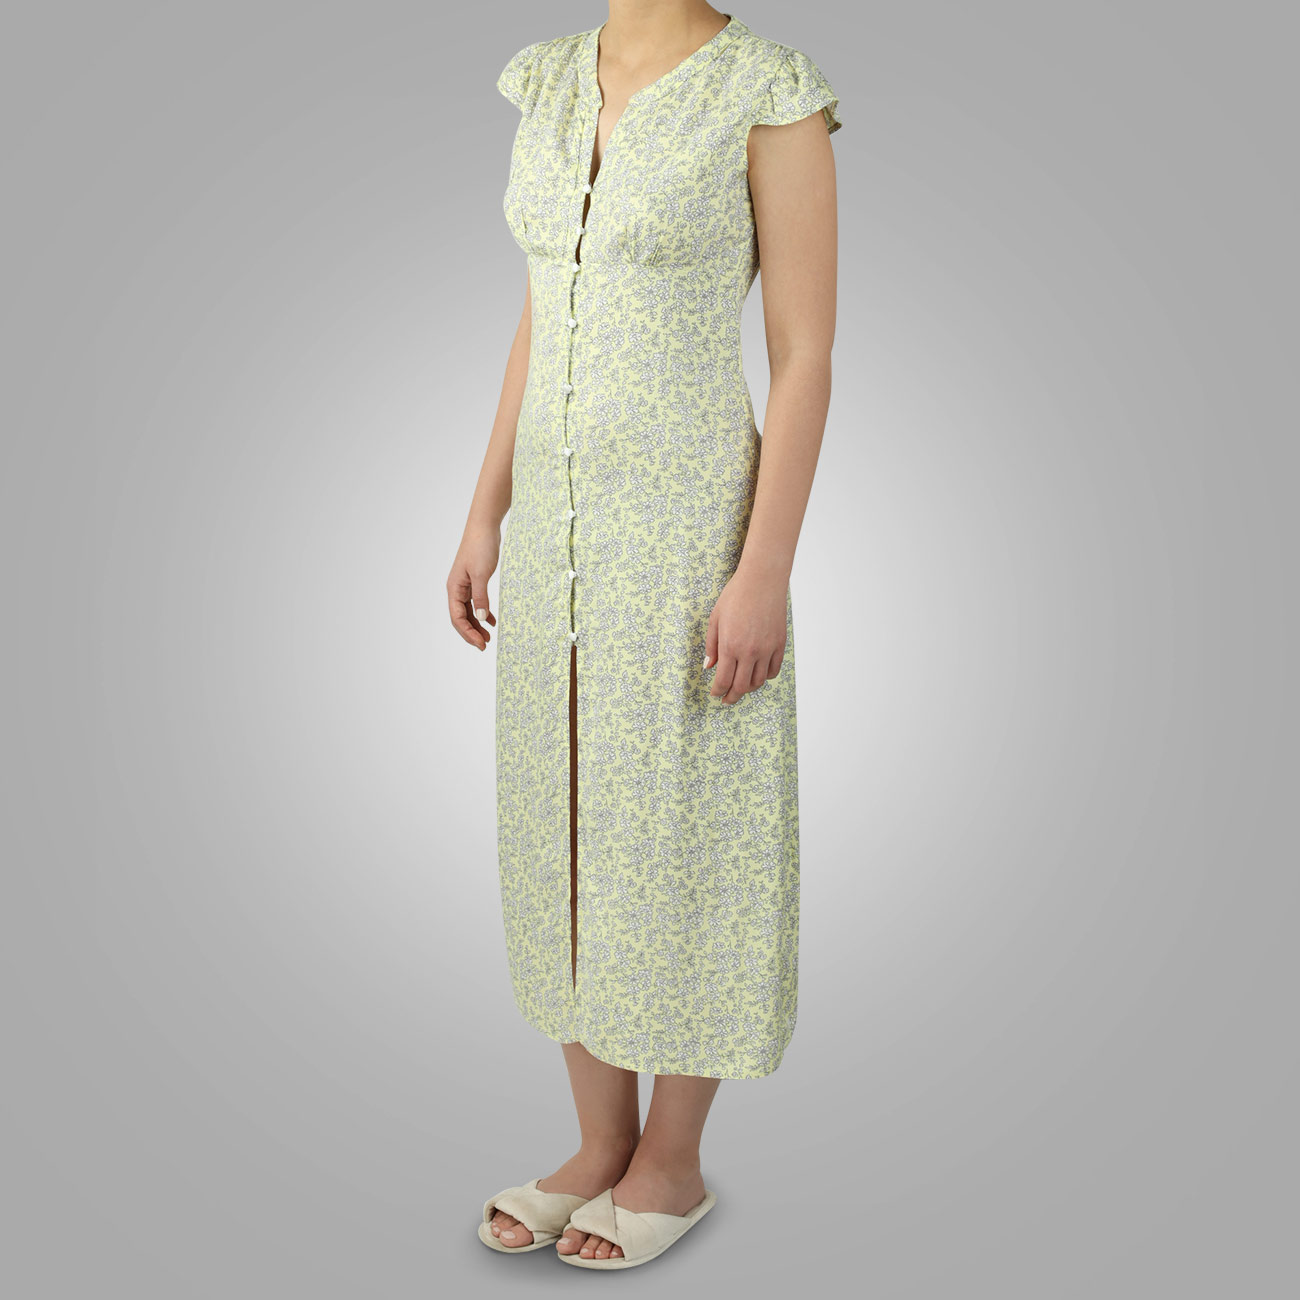 

Платье женское, миди, р. M, с коротким рукавом, вискоза, желтое, Цветы, Sylvia